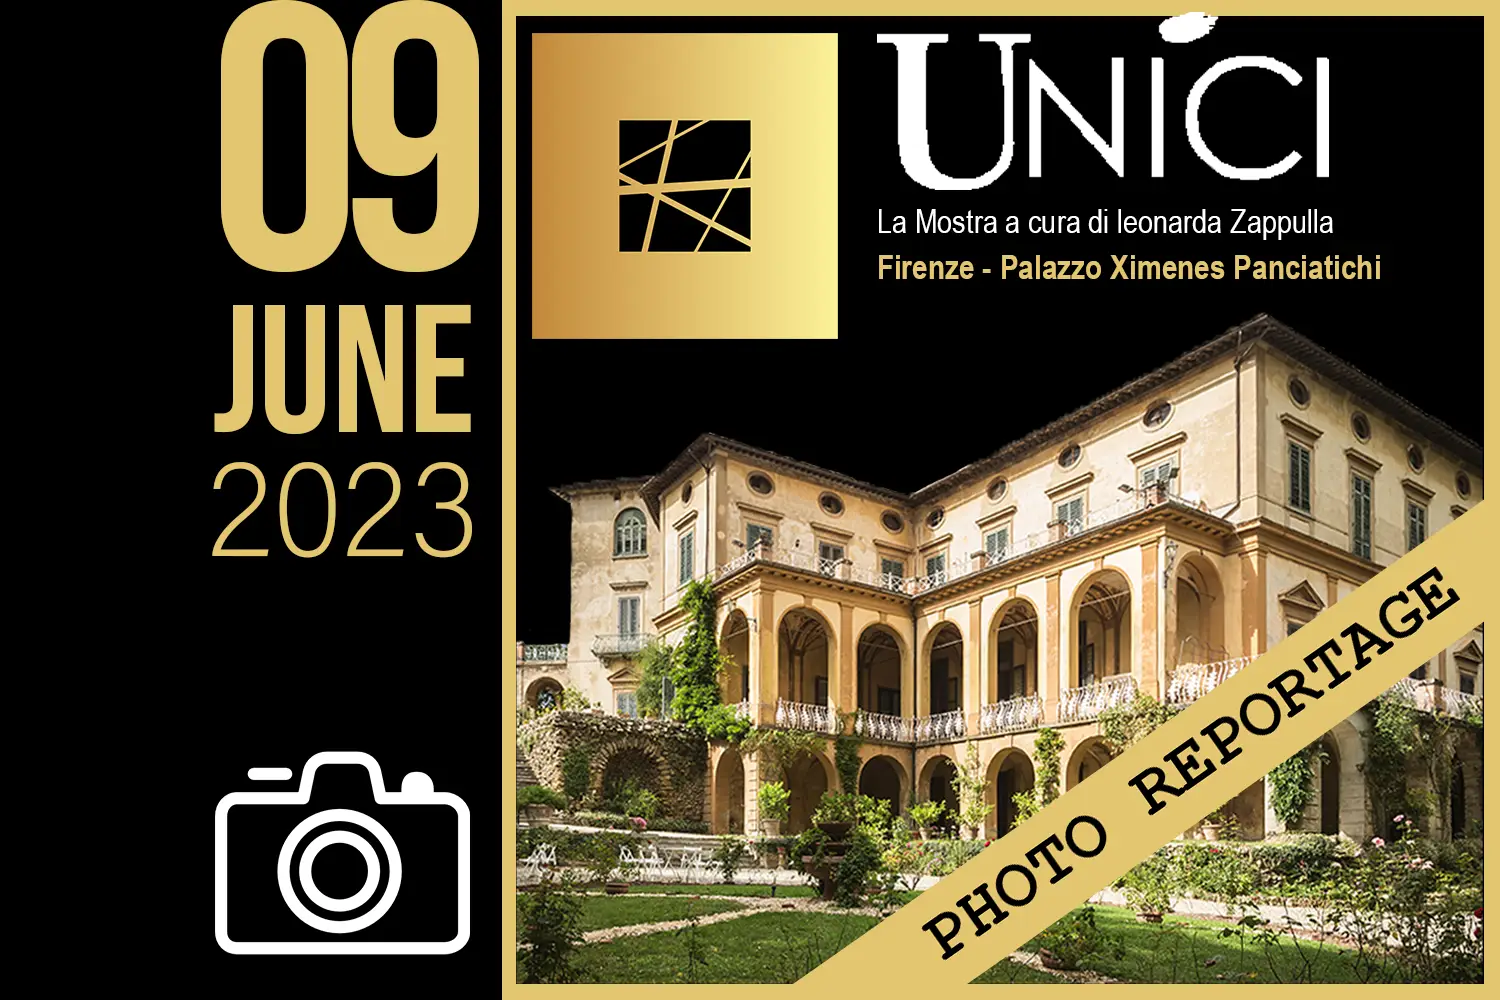 UNICI 2023 - FIRENZE Palazzo Ximenes Panciatichi - 9 giugno 2023